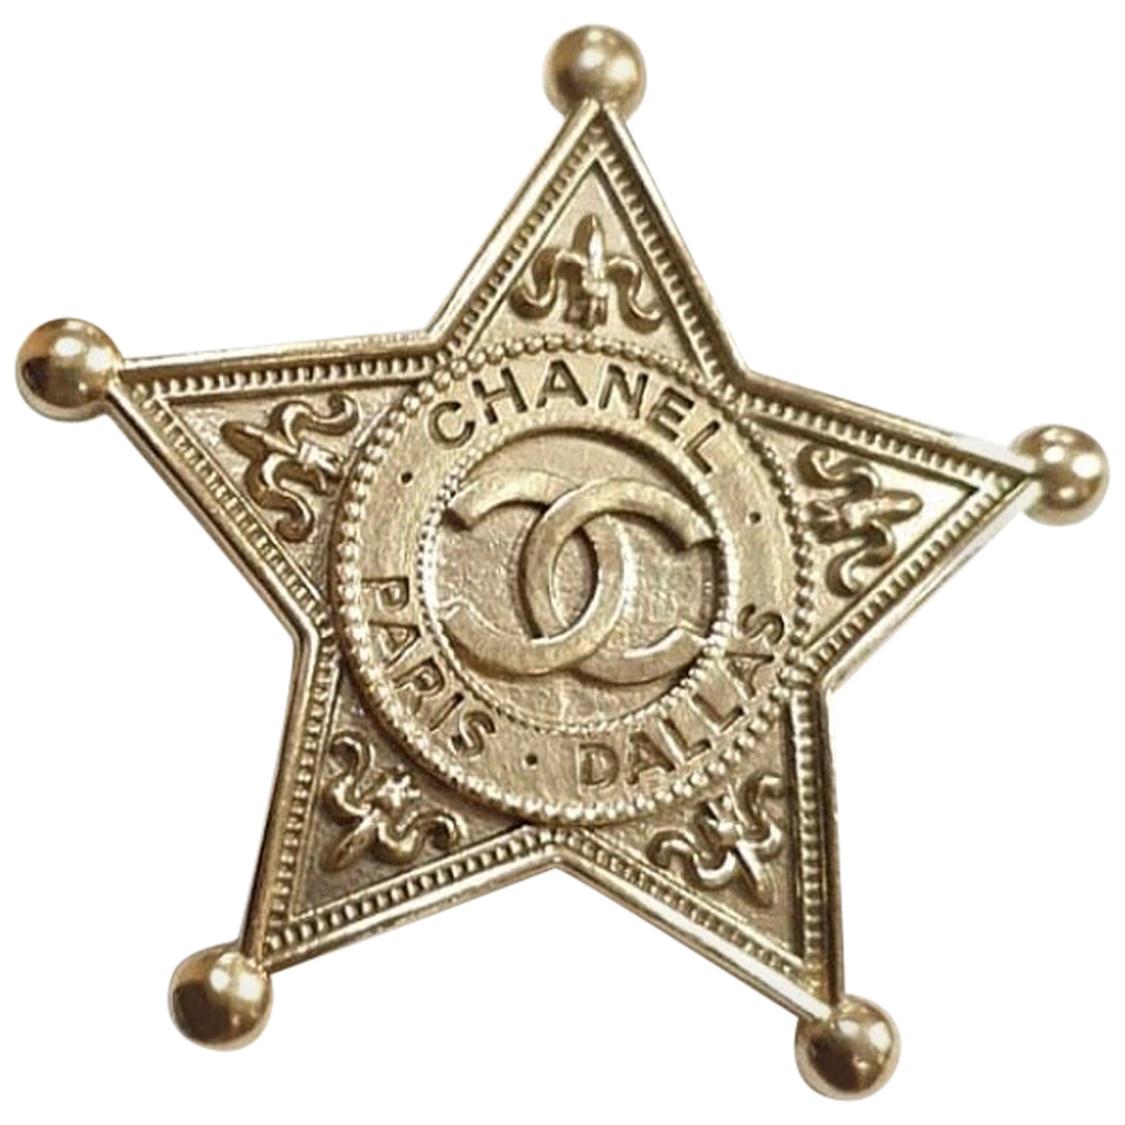  Chanel Dallas Paris Sheriff Star Brooch